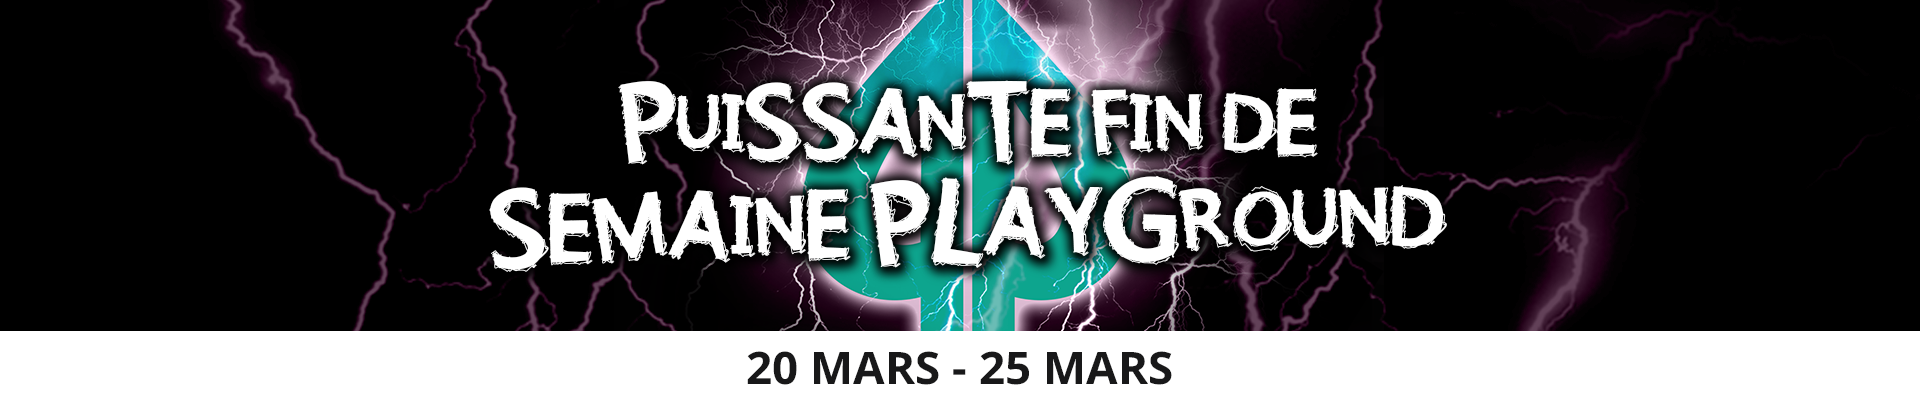 Puissante Fin De Semaine Playground Mars 2019